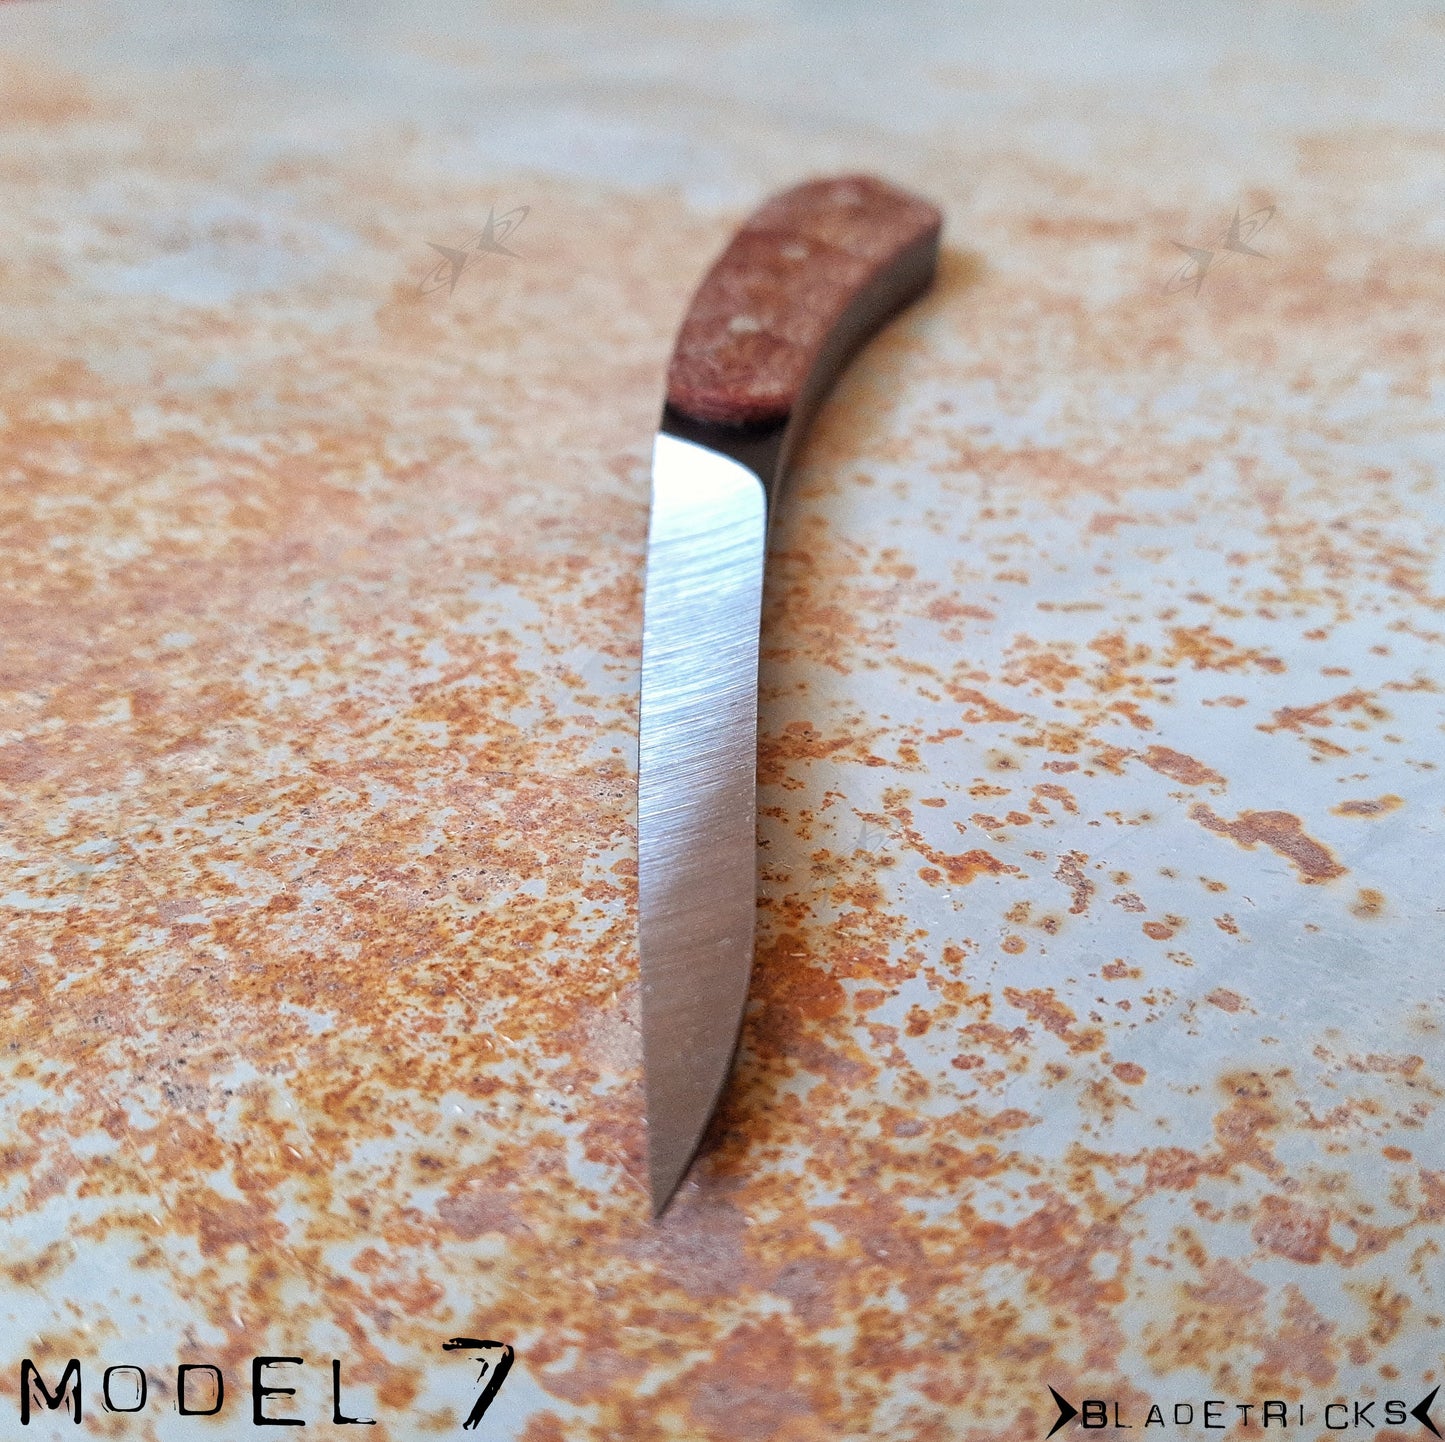 BLADETRICKS CUSTOM MODEL 7 KNIFE, MICARTA